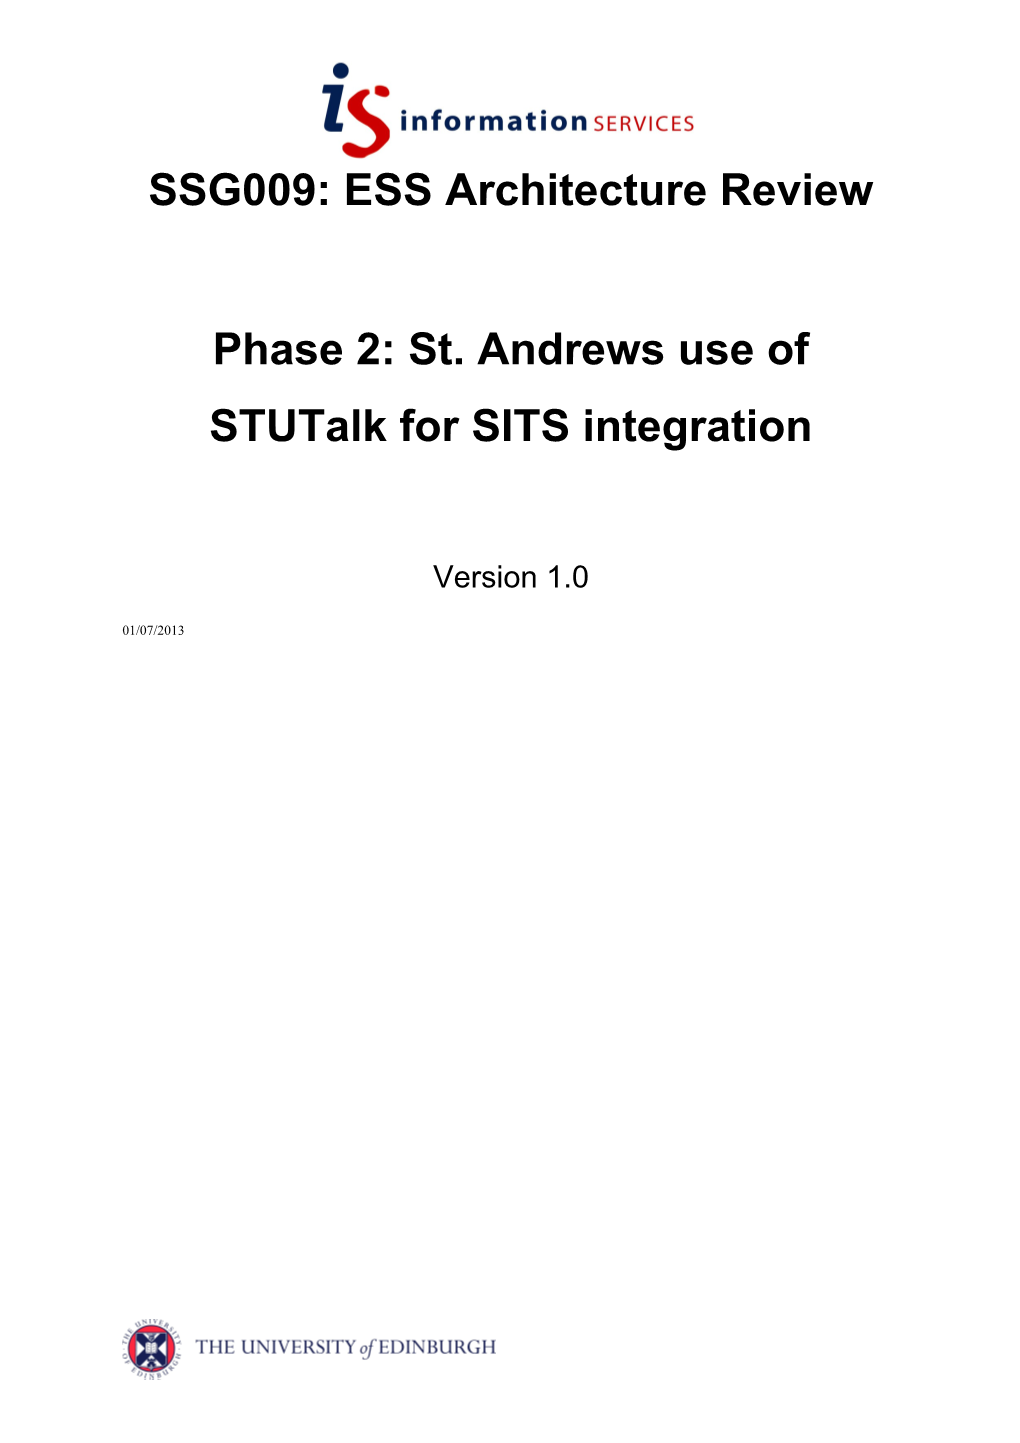 Phase 2: St. Andrews Use of Stutalk for SITS Integration